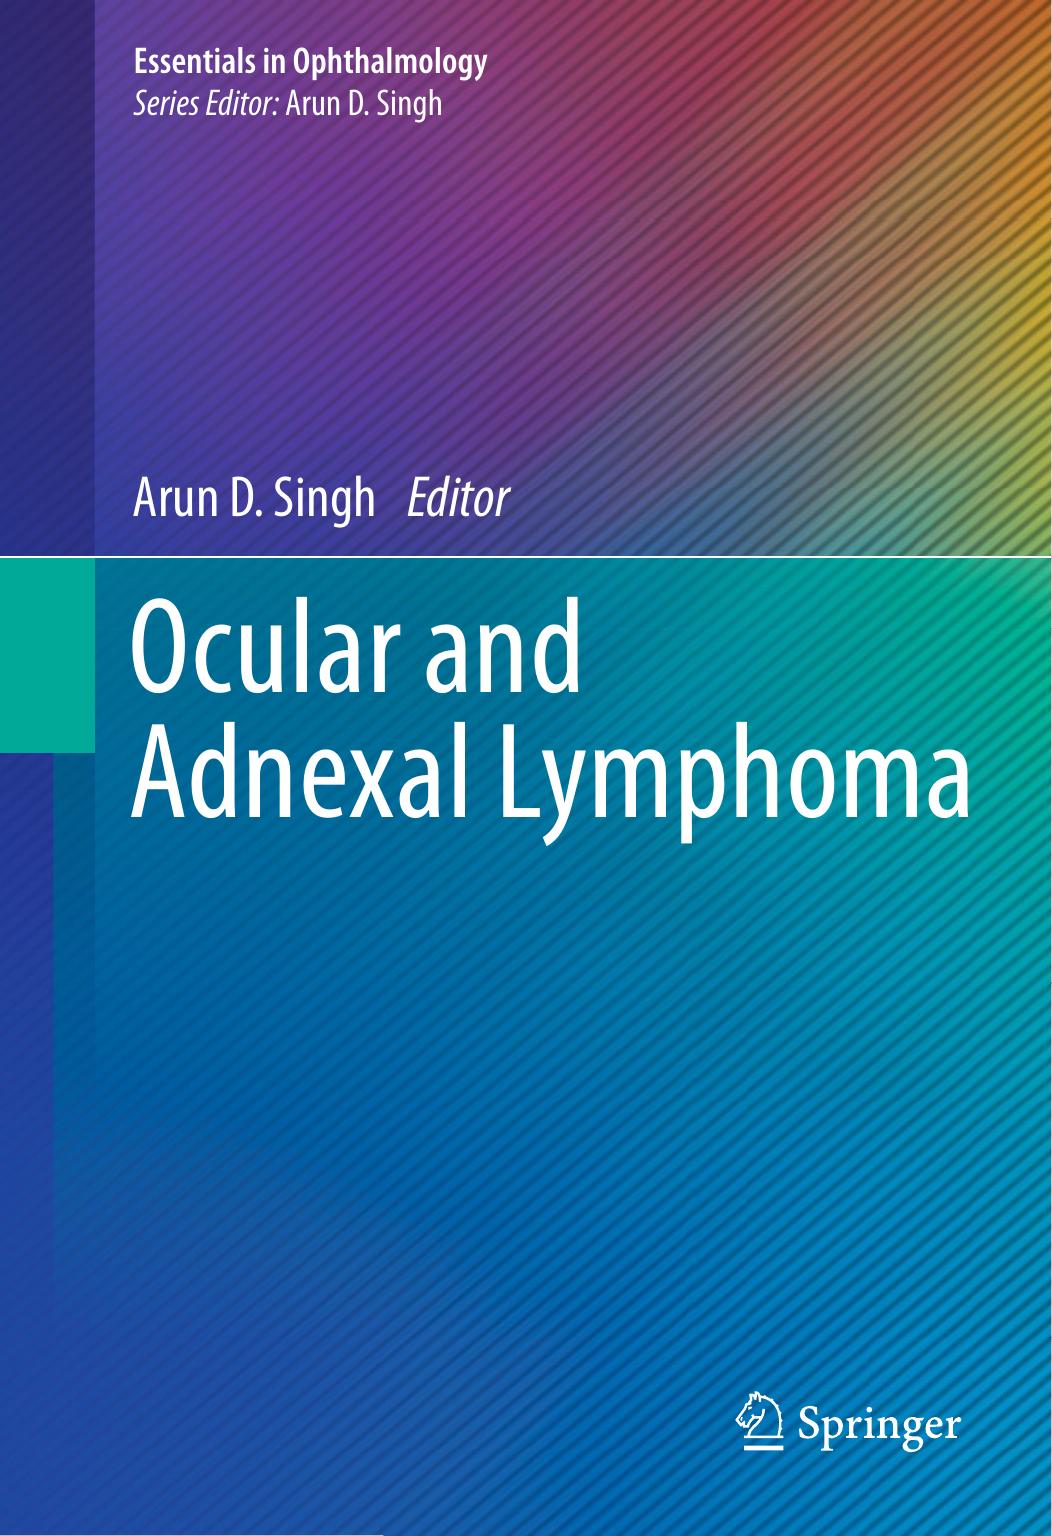 Ocular and Adnexal Lymphoma 2014